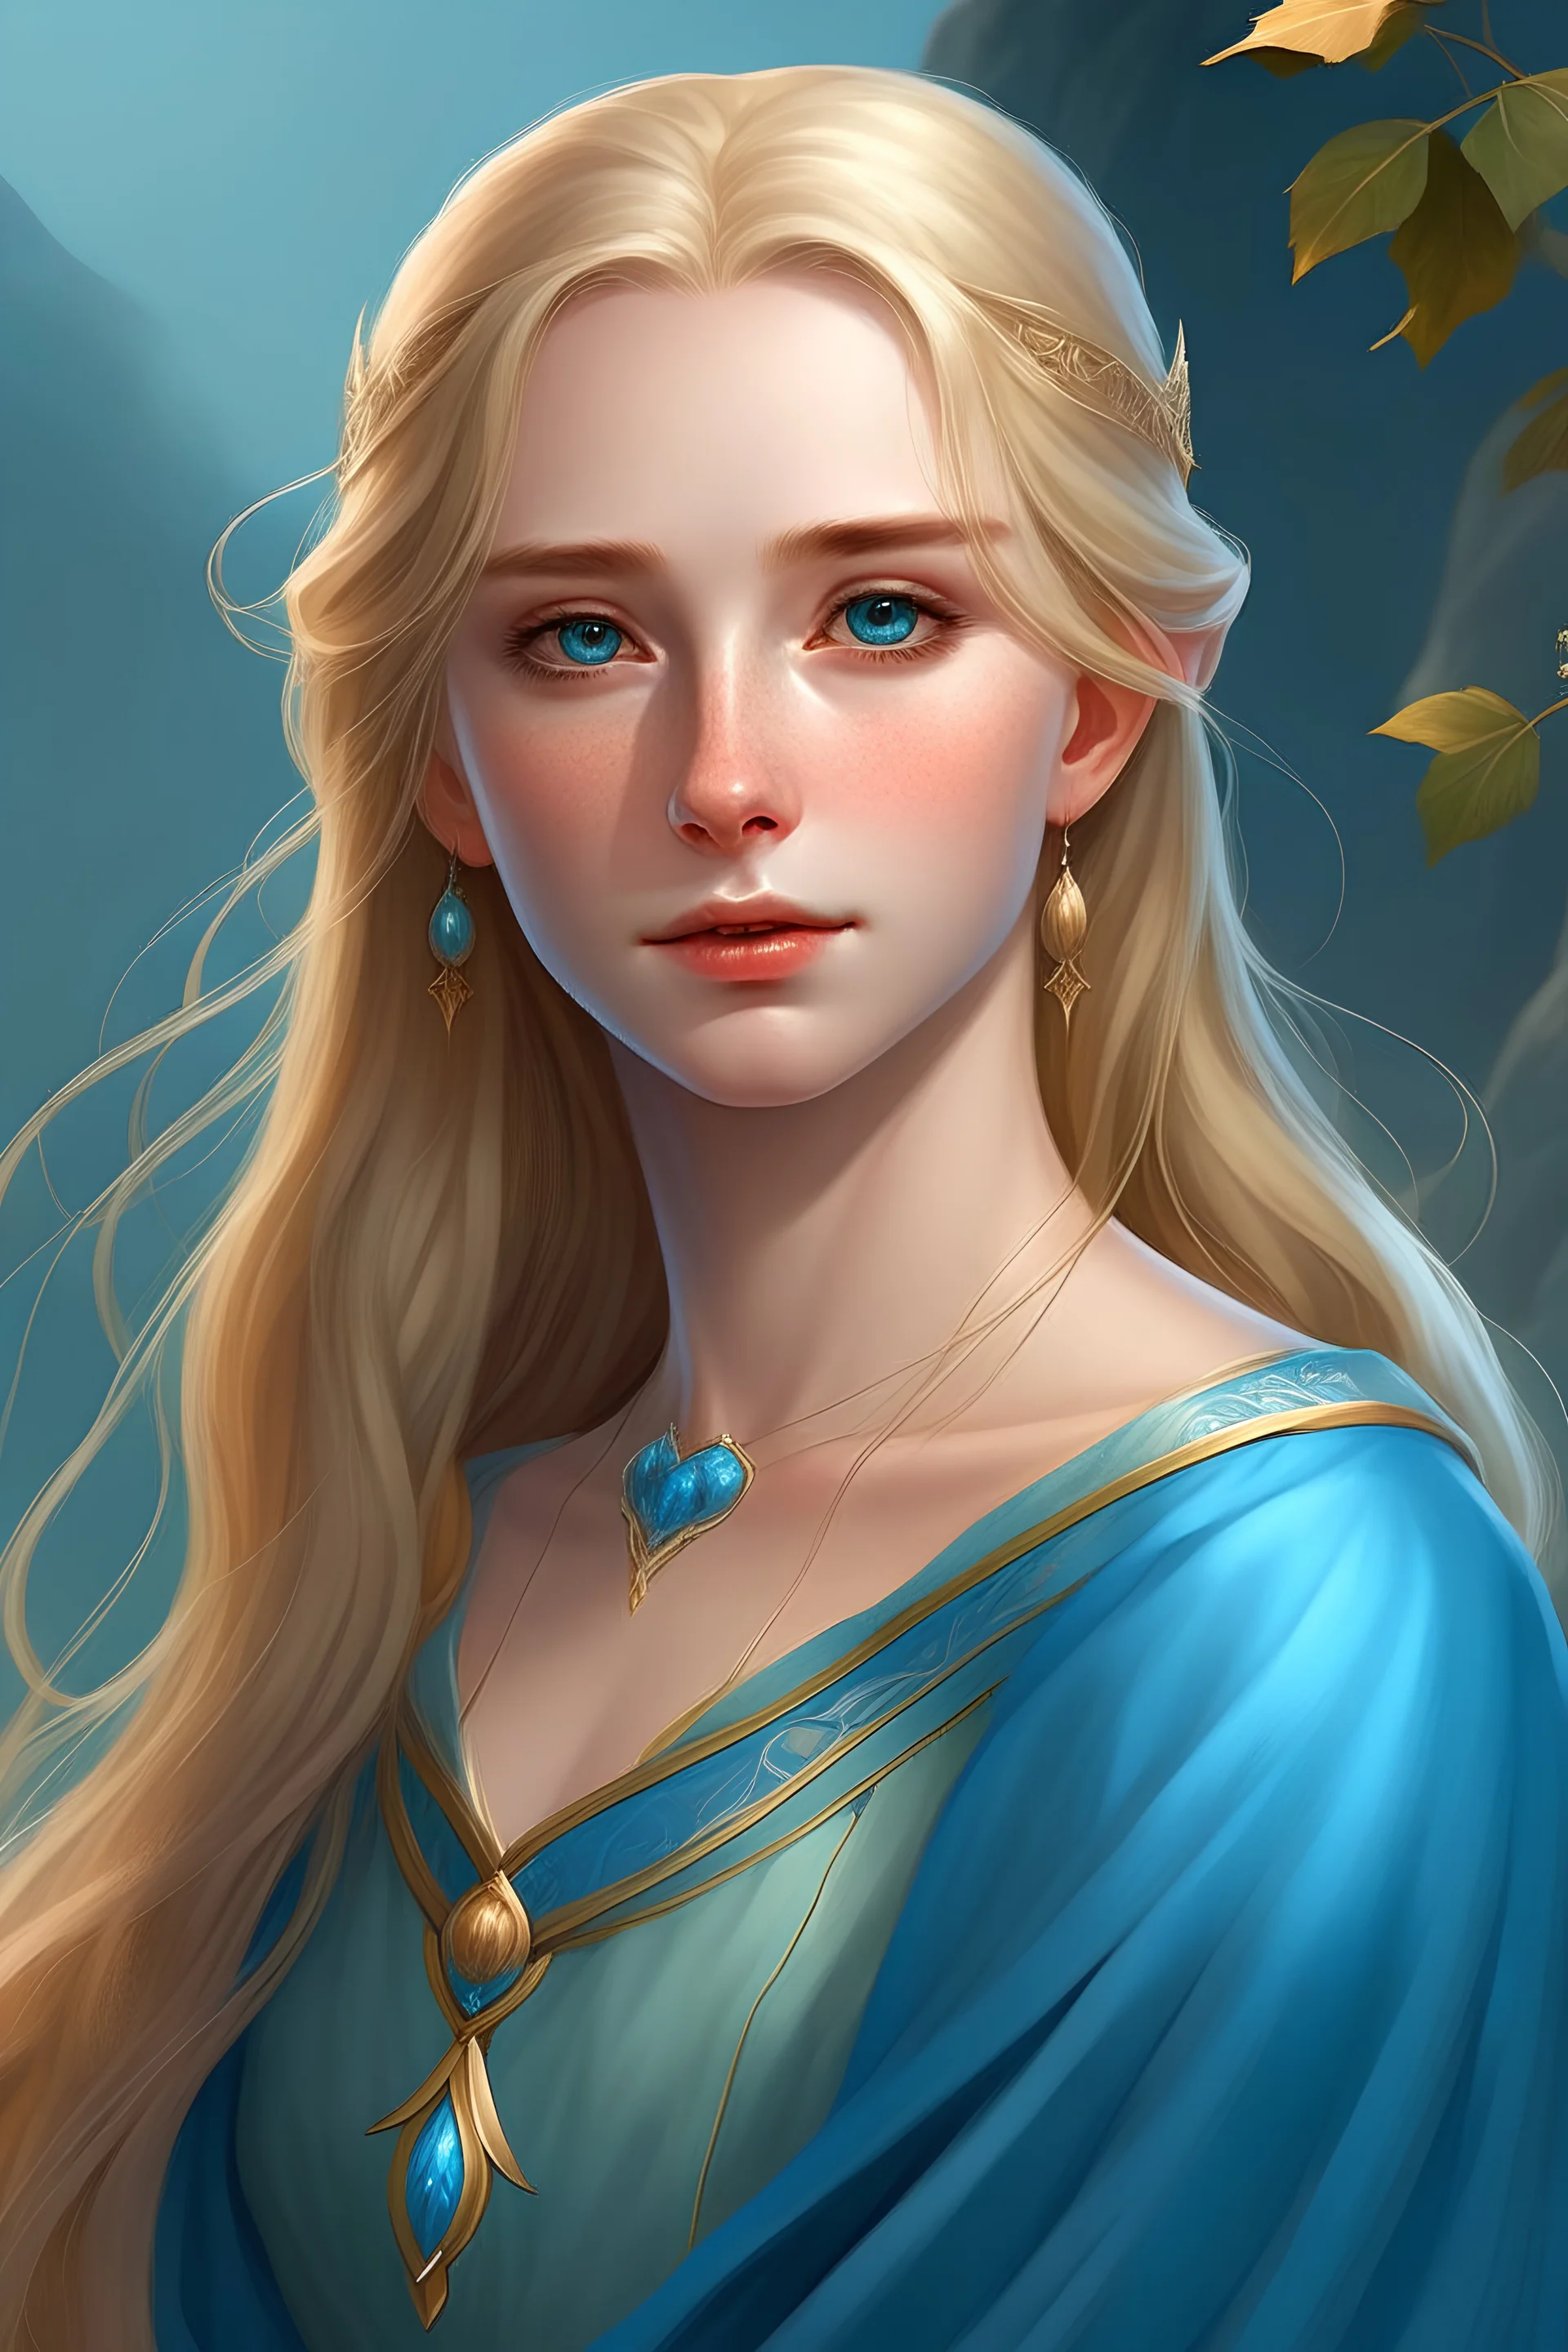 silmarillion, female elf princess, young woman, cute face, high cheekbones, azure blue eyes, long honey blonde hair, light eyebrows, light blue dress